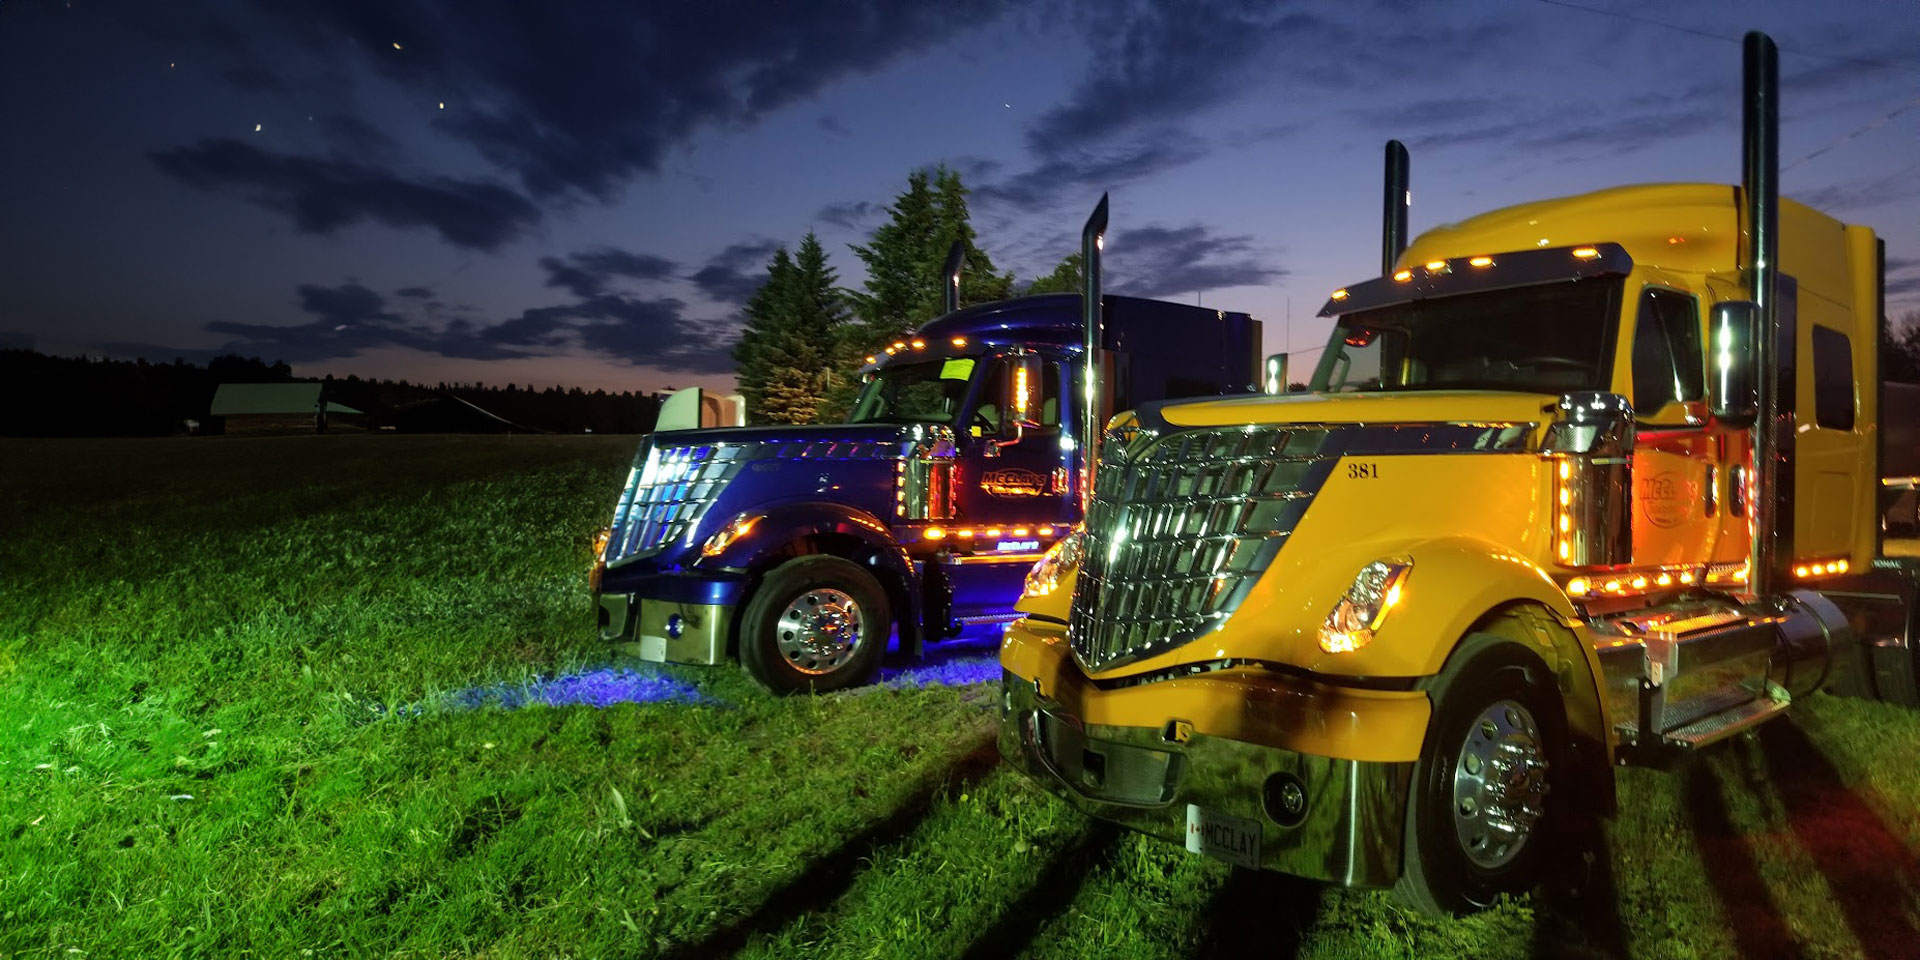 McClay's semi trucks parked in a grassy field at night